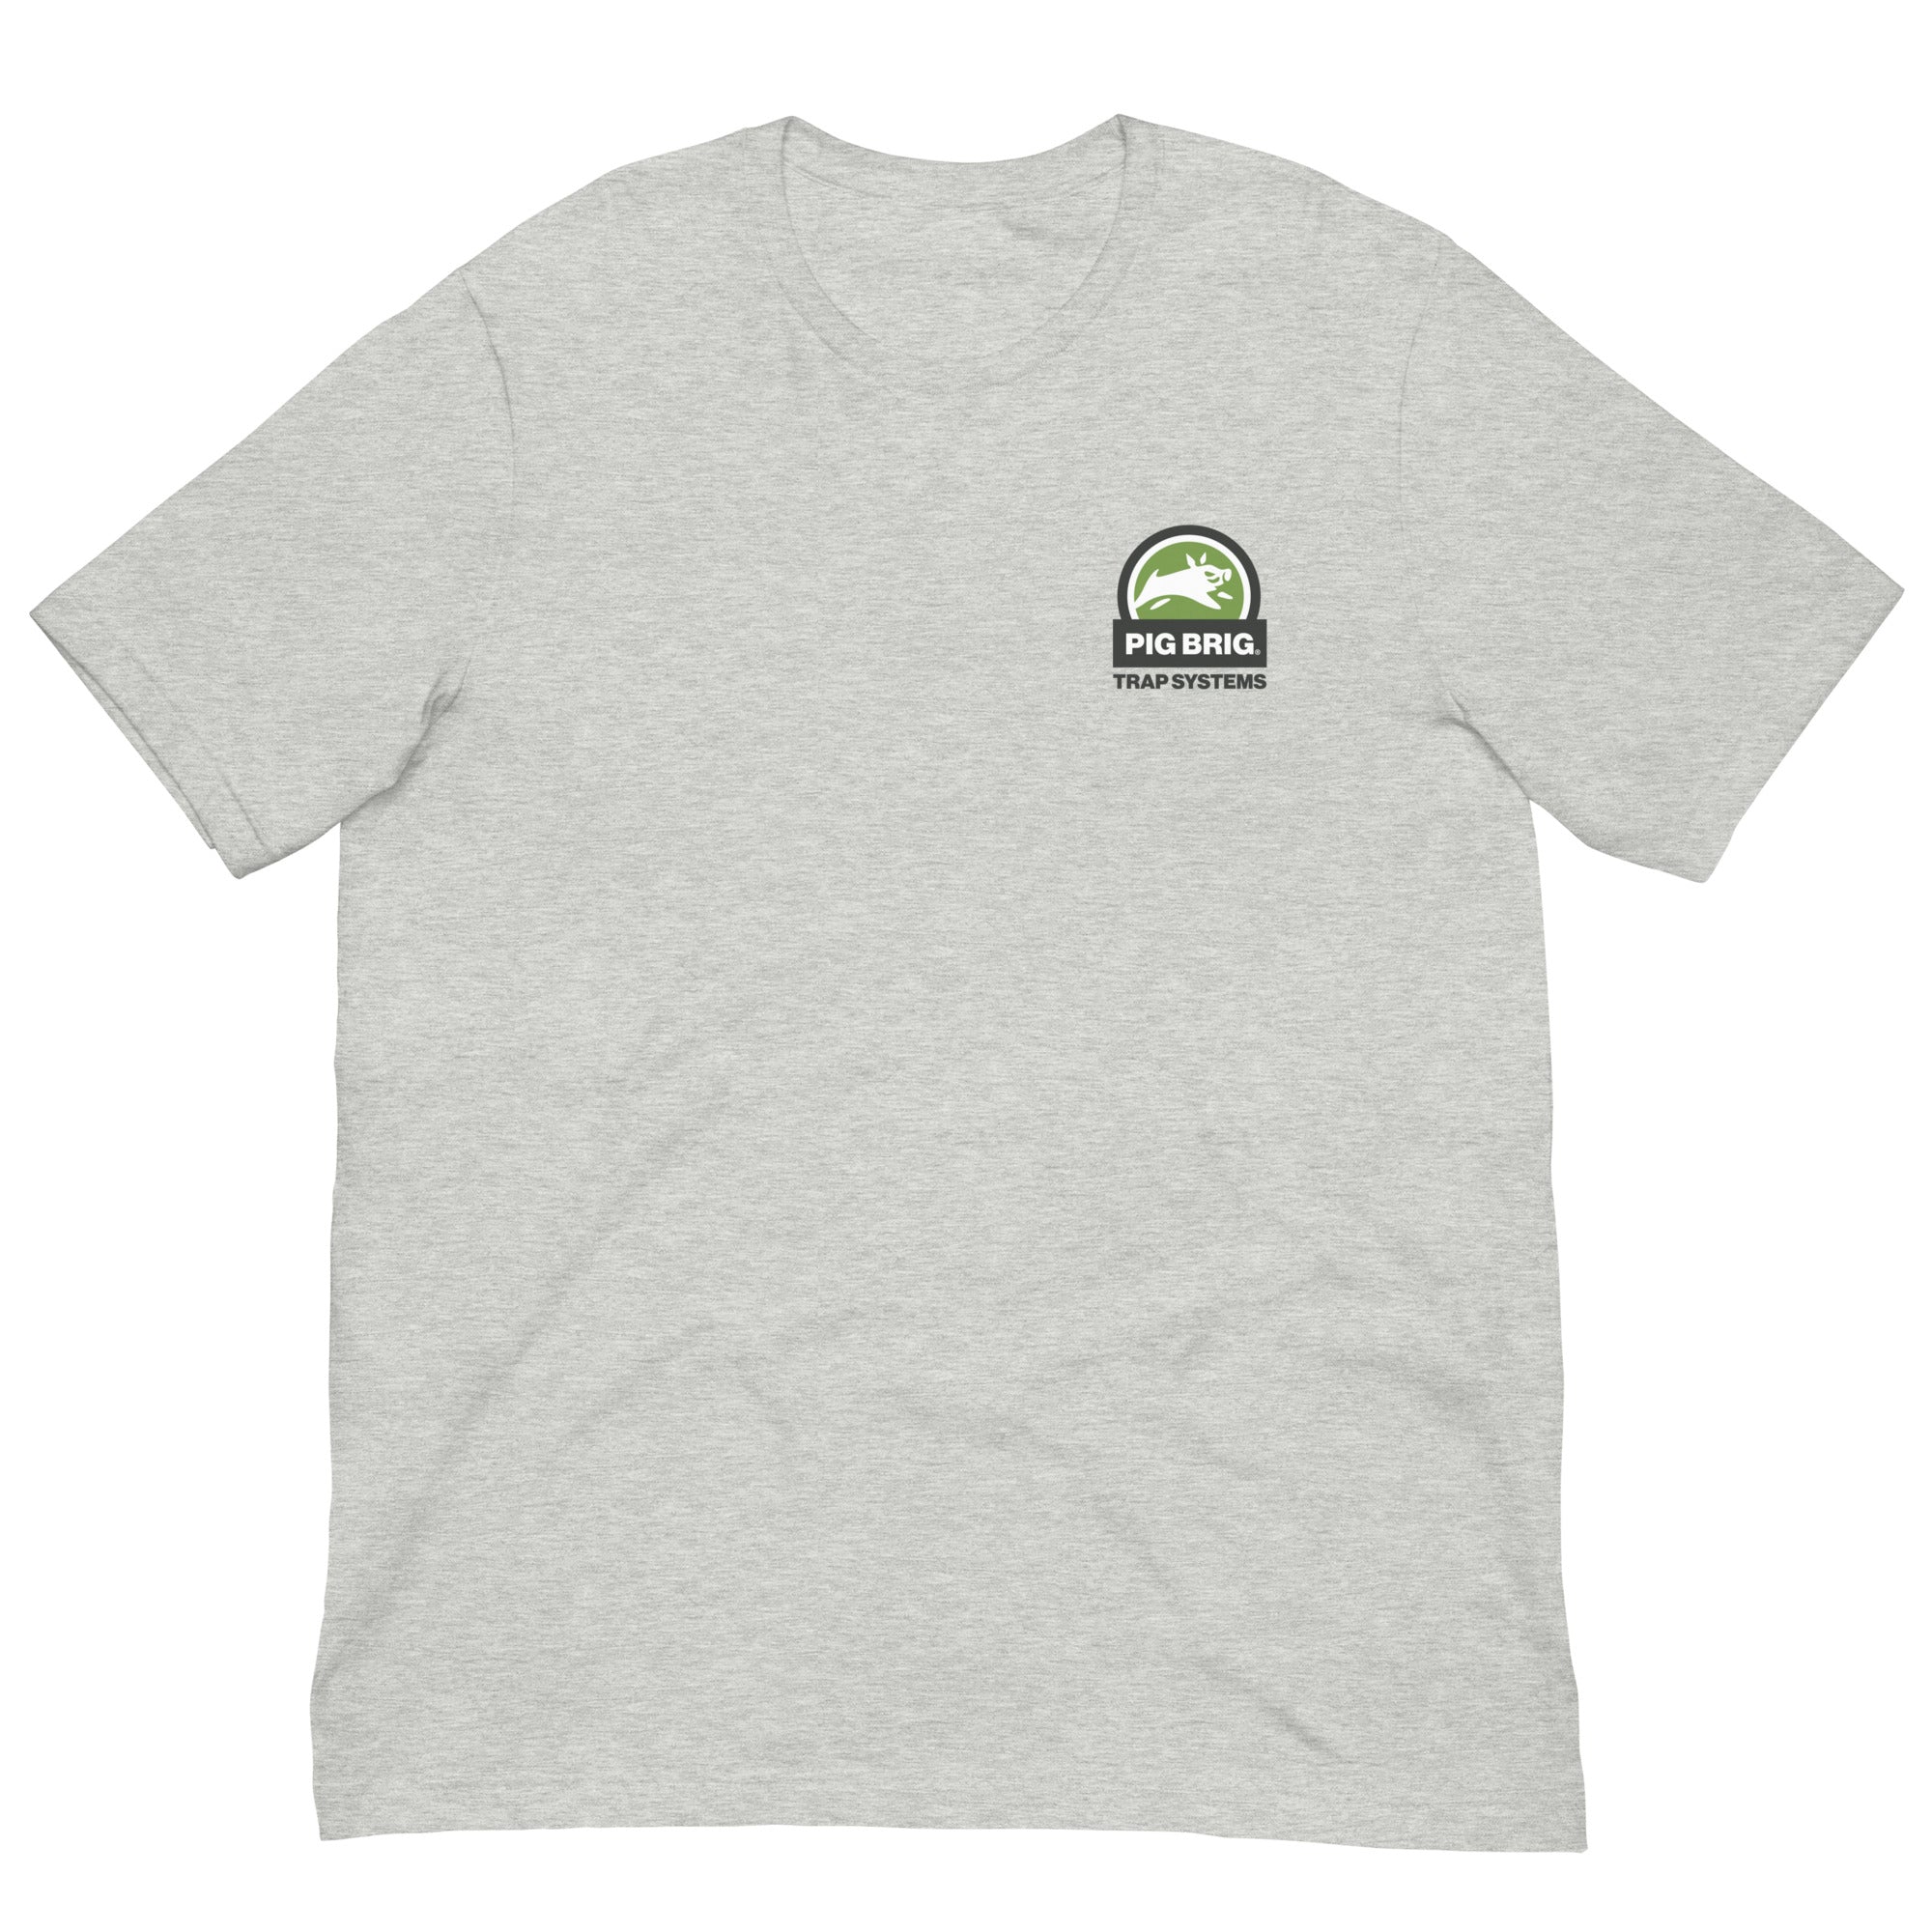 No Pig Left Behind. - Short-Sleeve Unisex T-Shirt